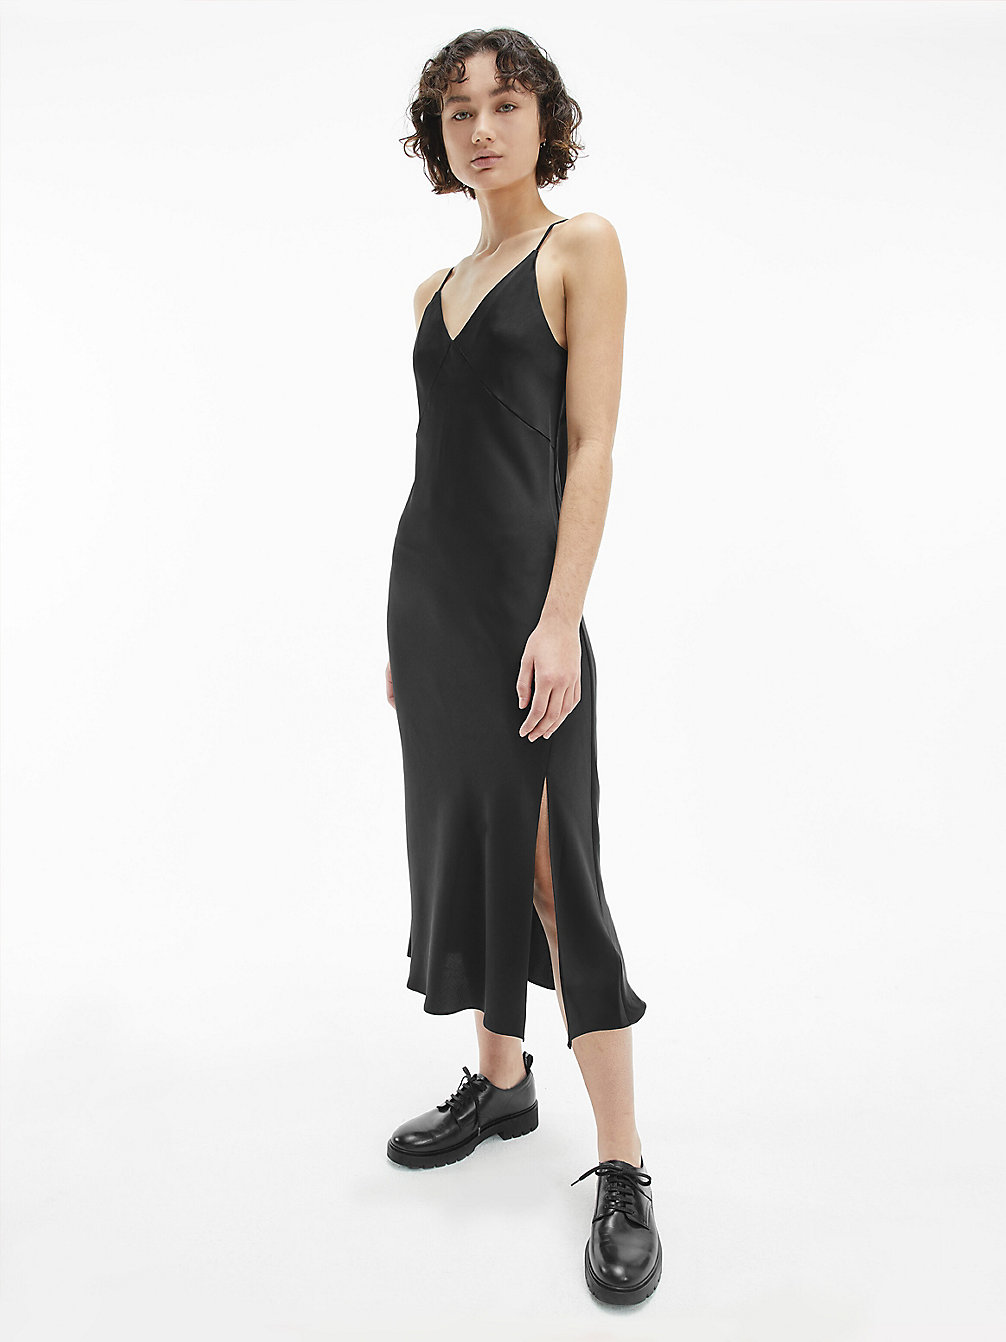 CK BLACK Satin Midi Slip Dress - CK Silhouettes undefined women Calvin Klein